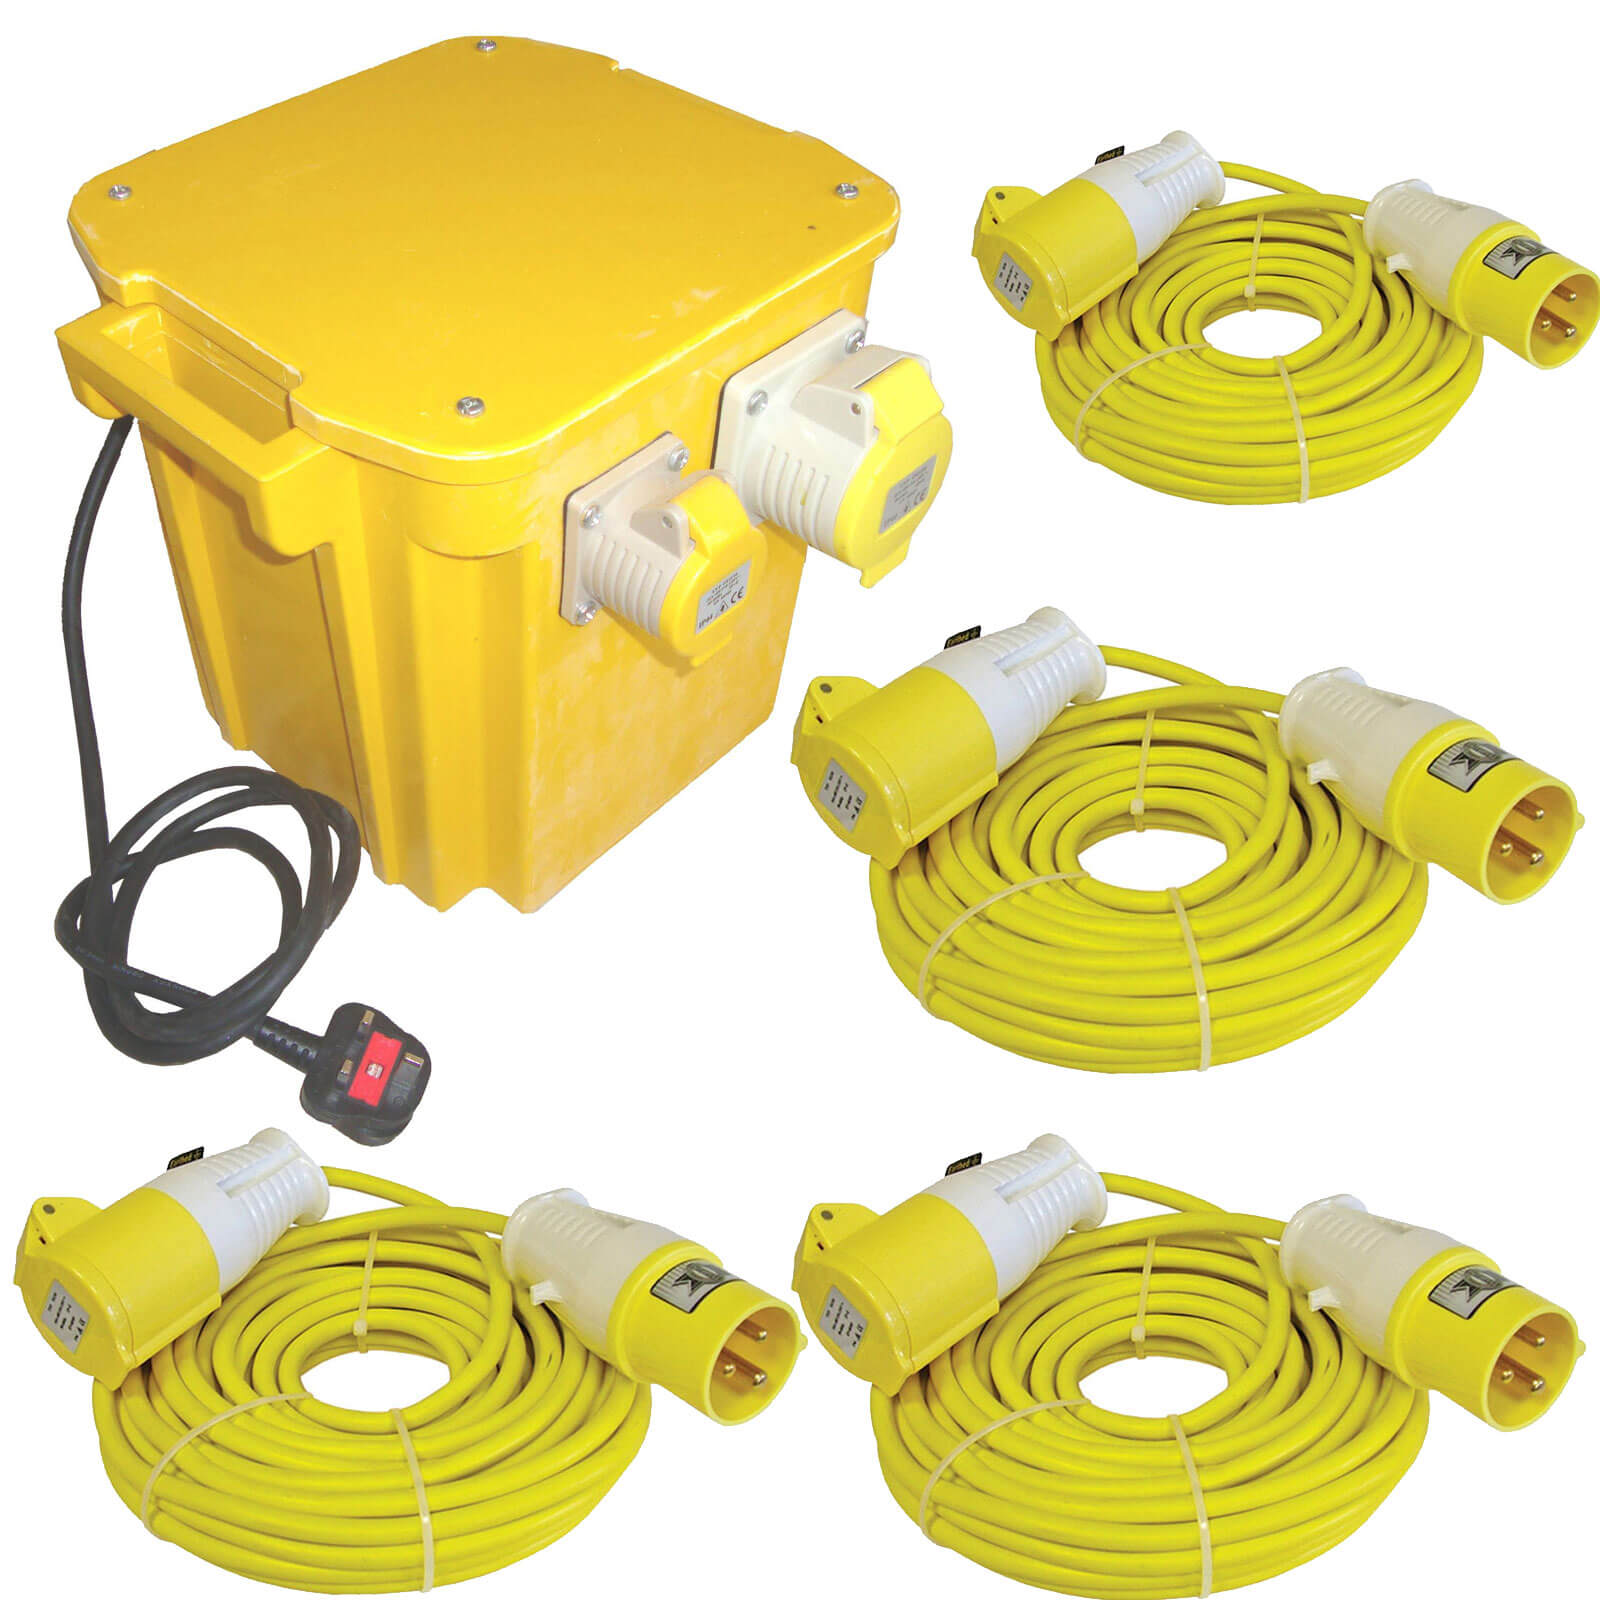 Image of Sirius Professional 5kva 110v Site Power Supply Kit